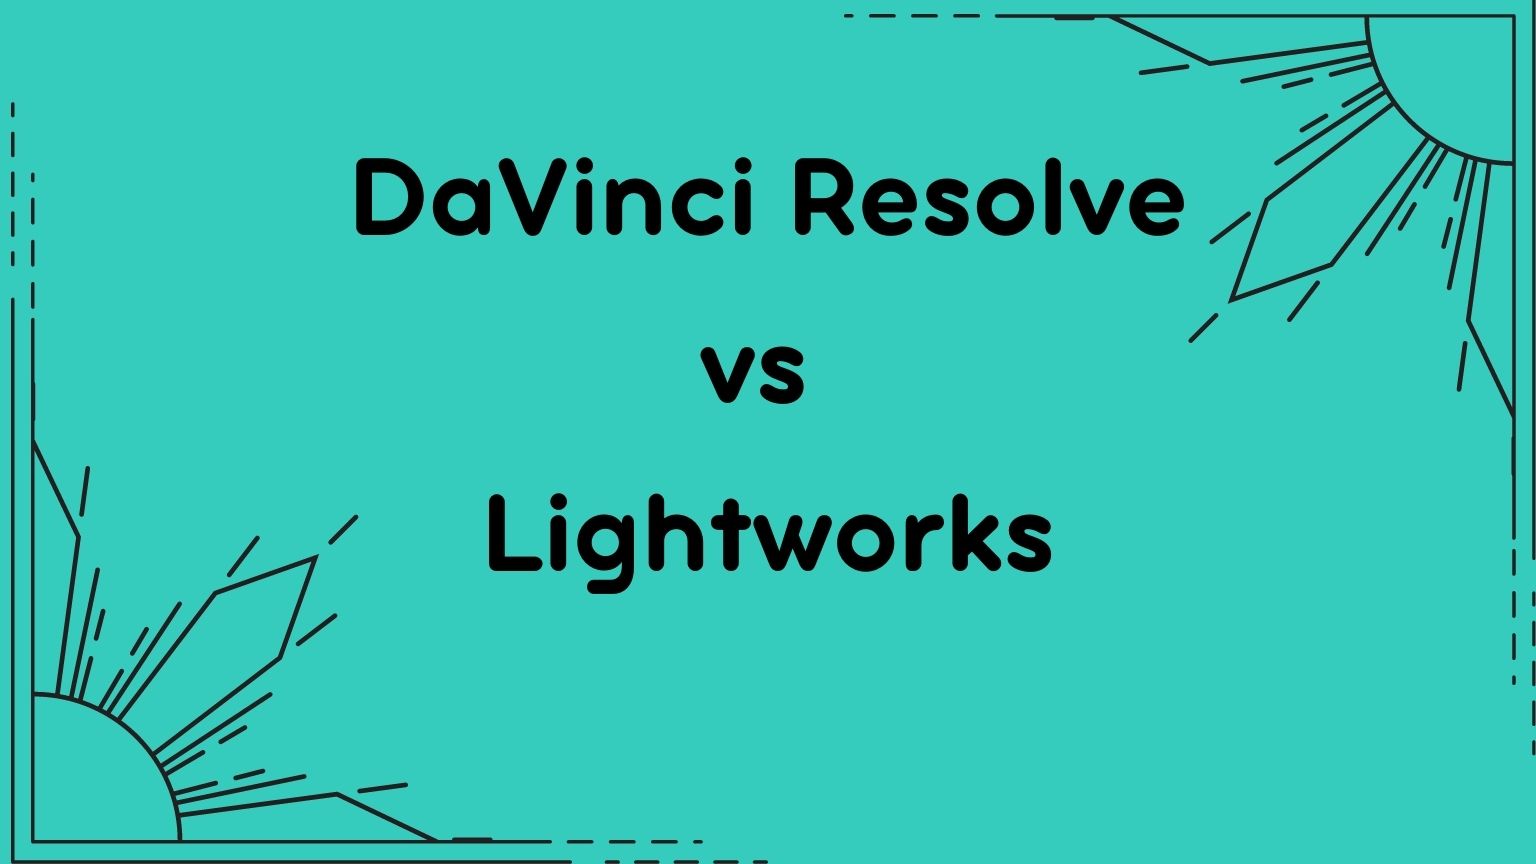 DaVinci Resolve vs Lightworks